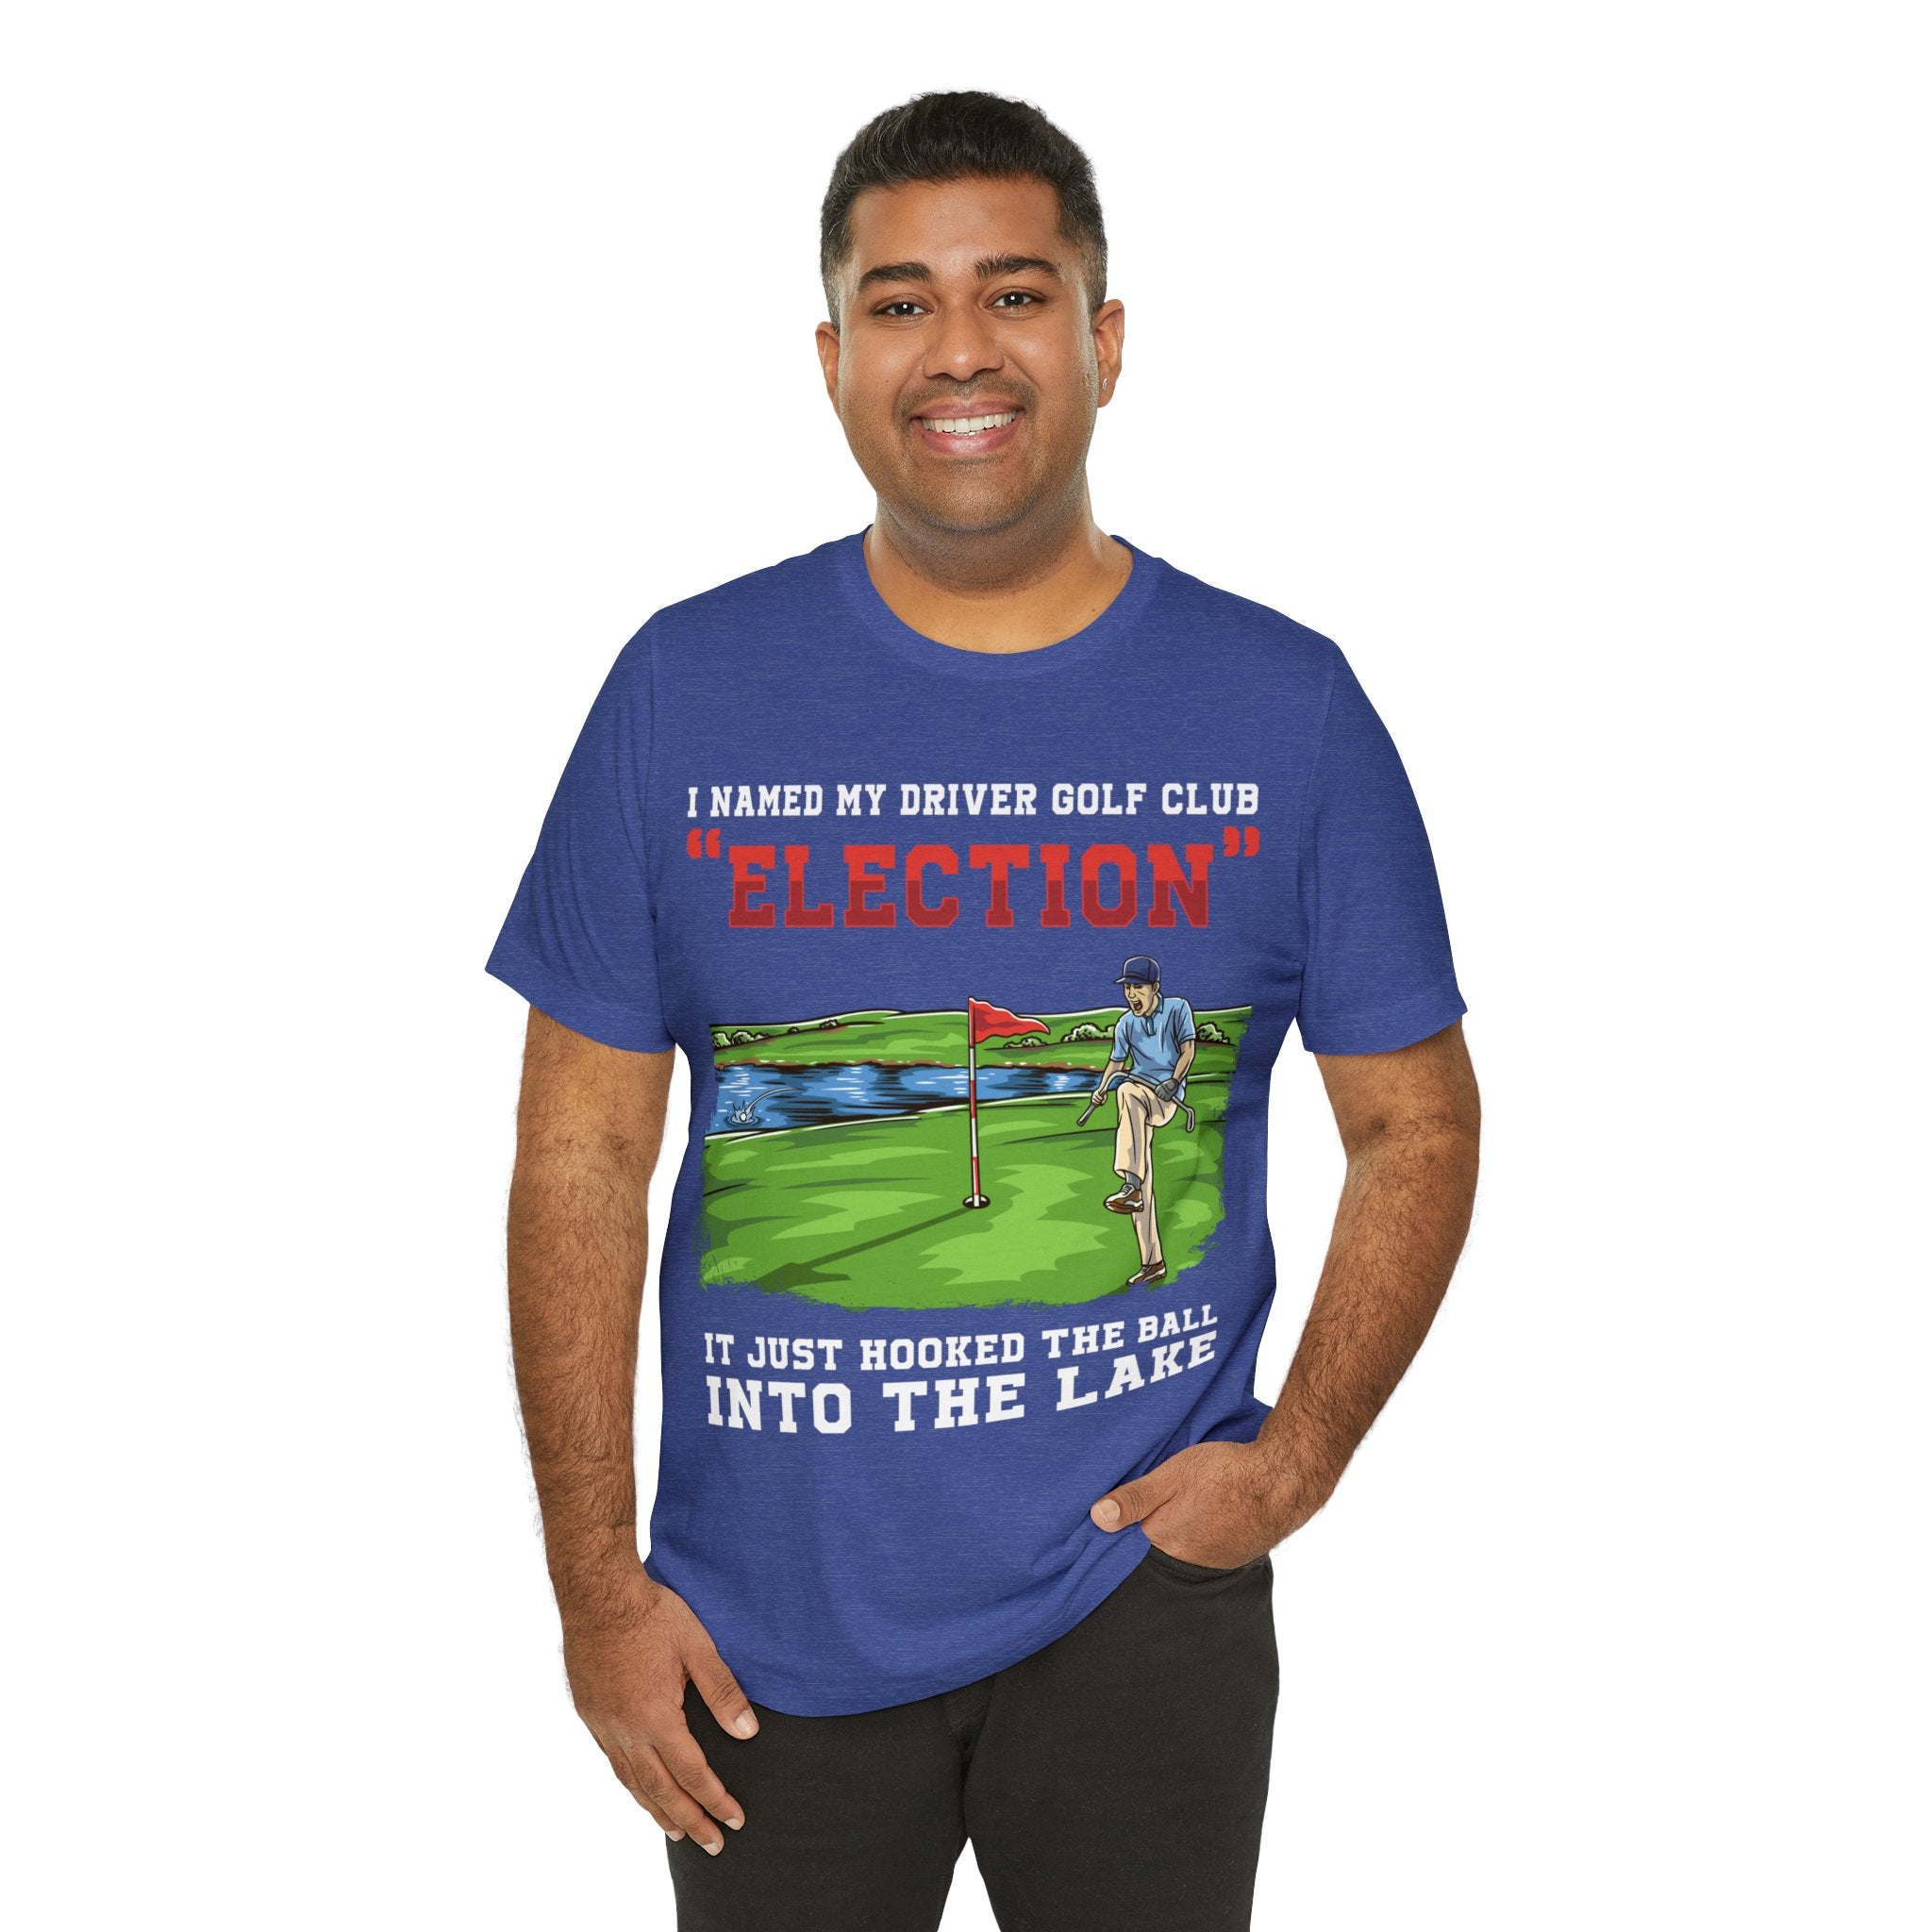 Bad Golf Club - Election Tee